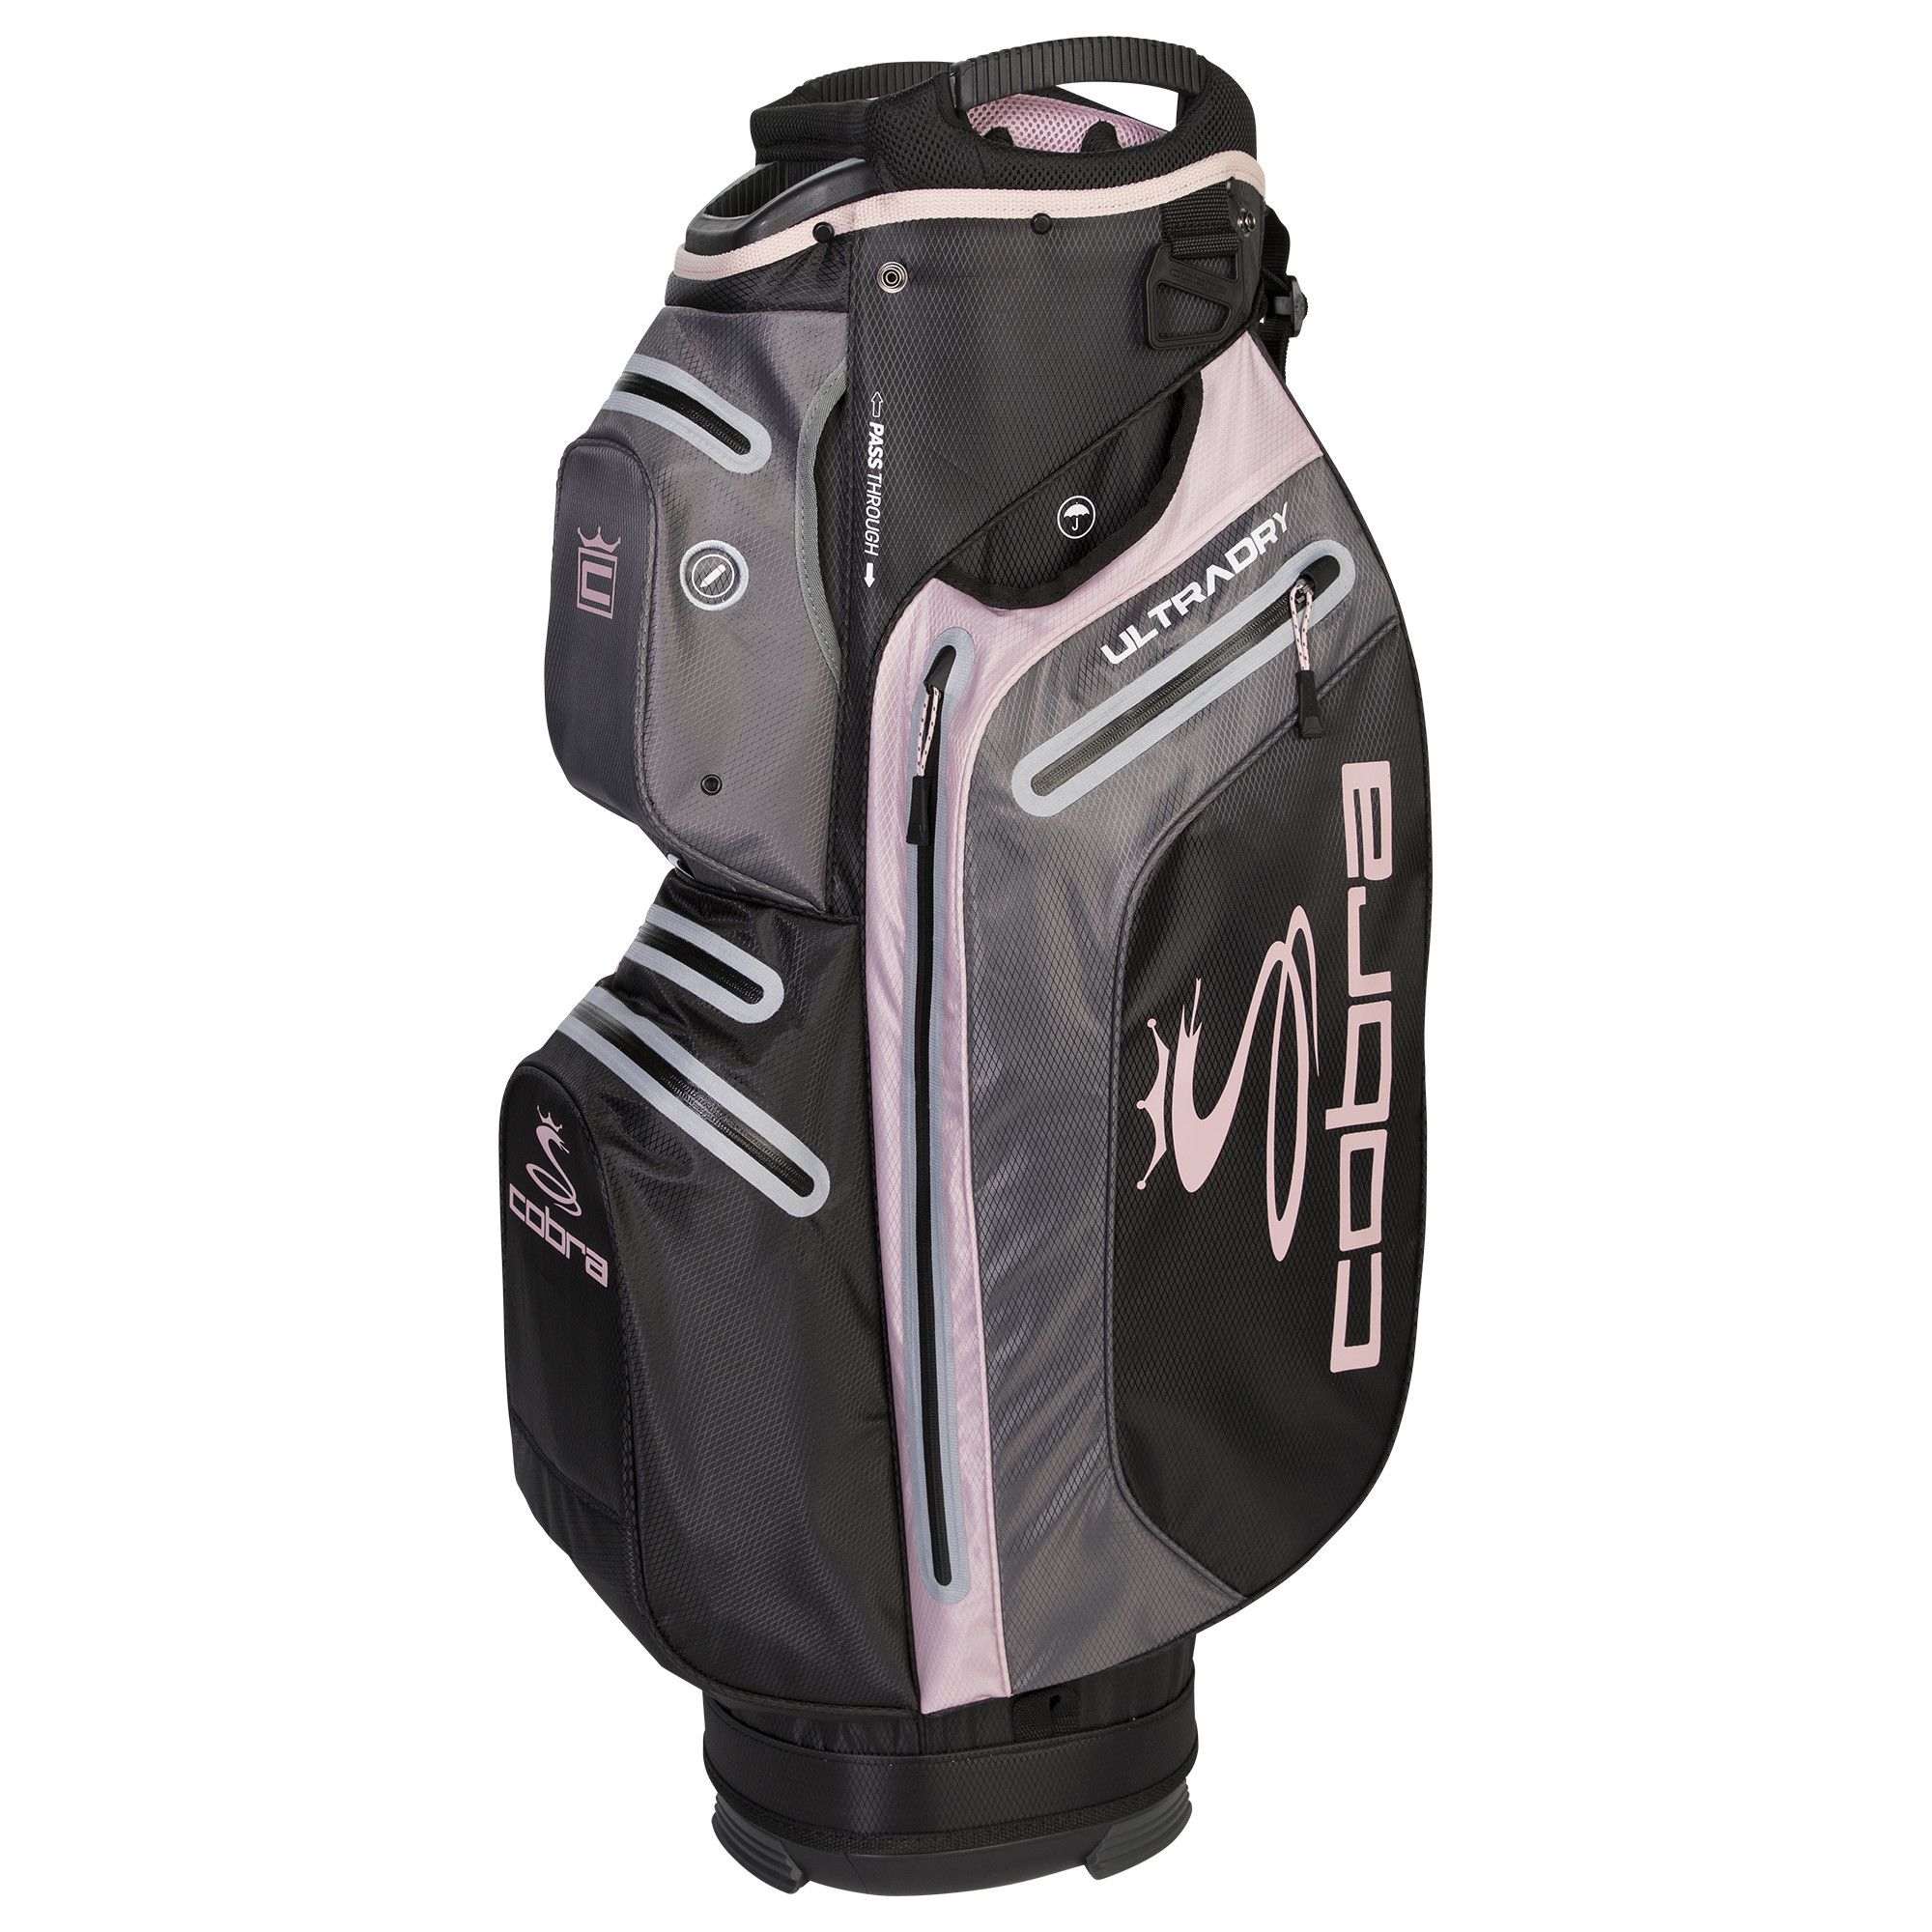 Are cobra golf bag waterproof?